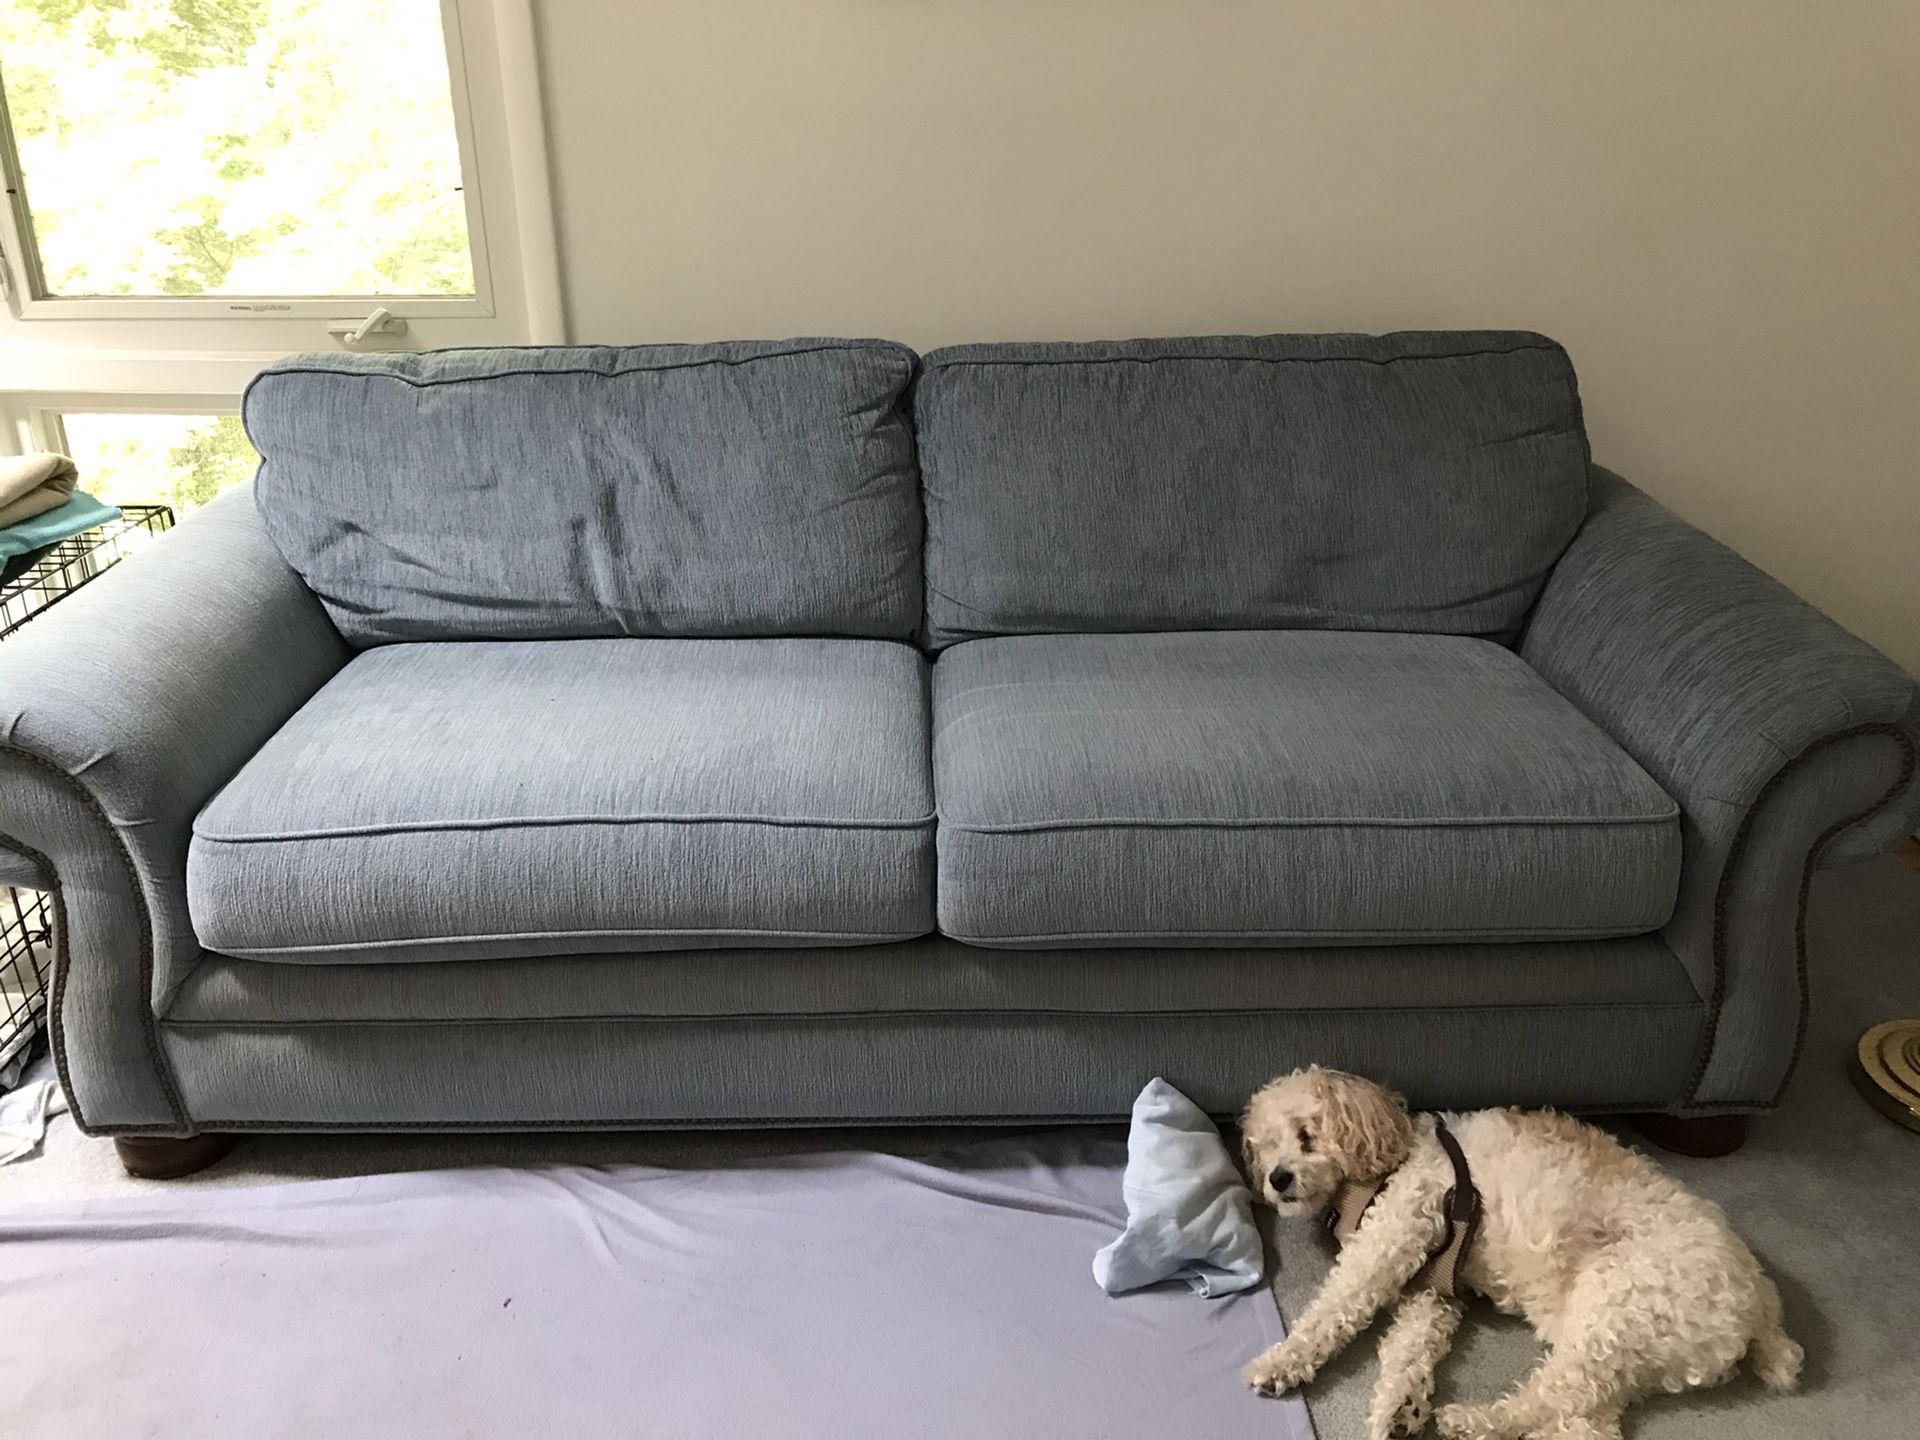 Lazyboy sofa